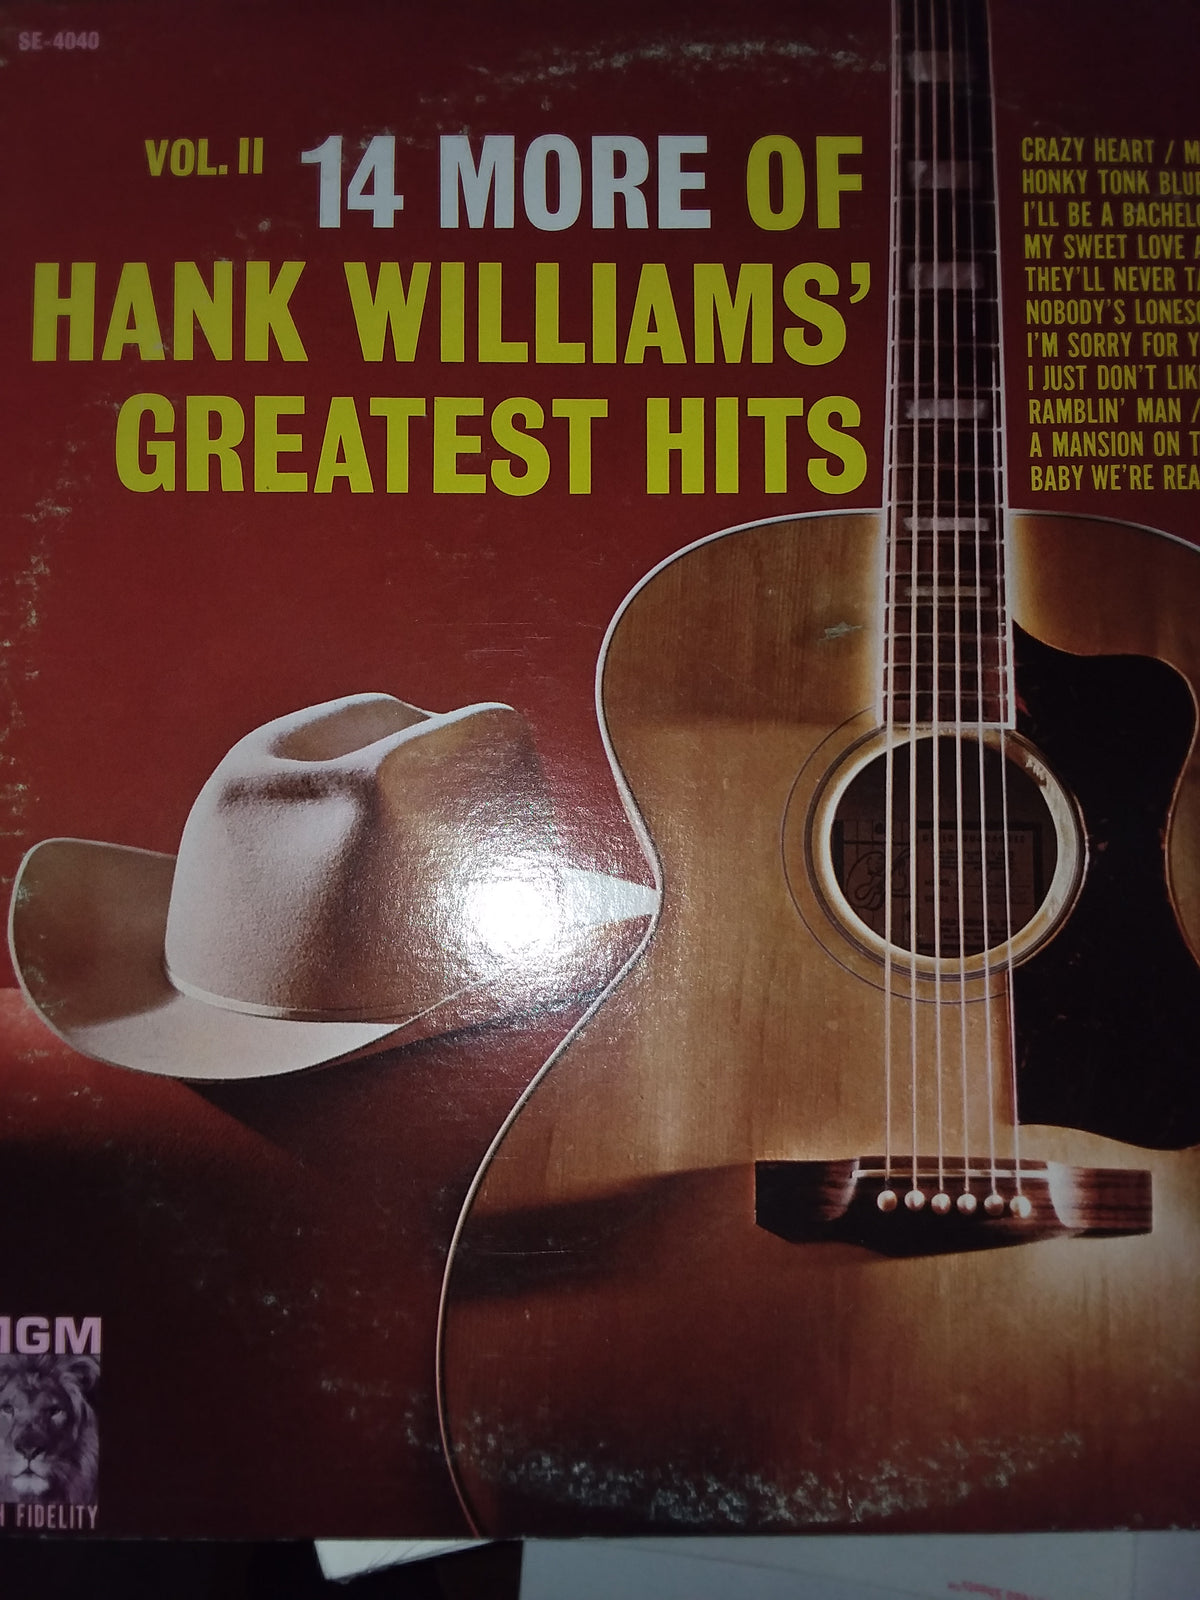 Hank Williams greatest hits volume 2 vinyl record used